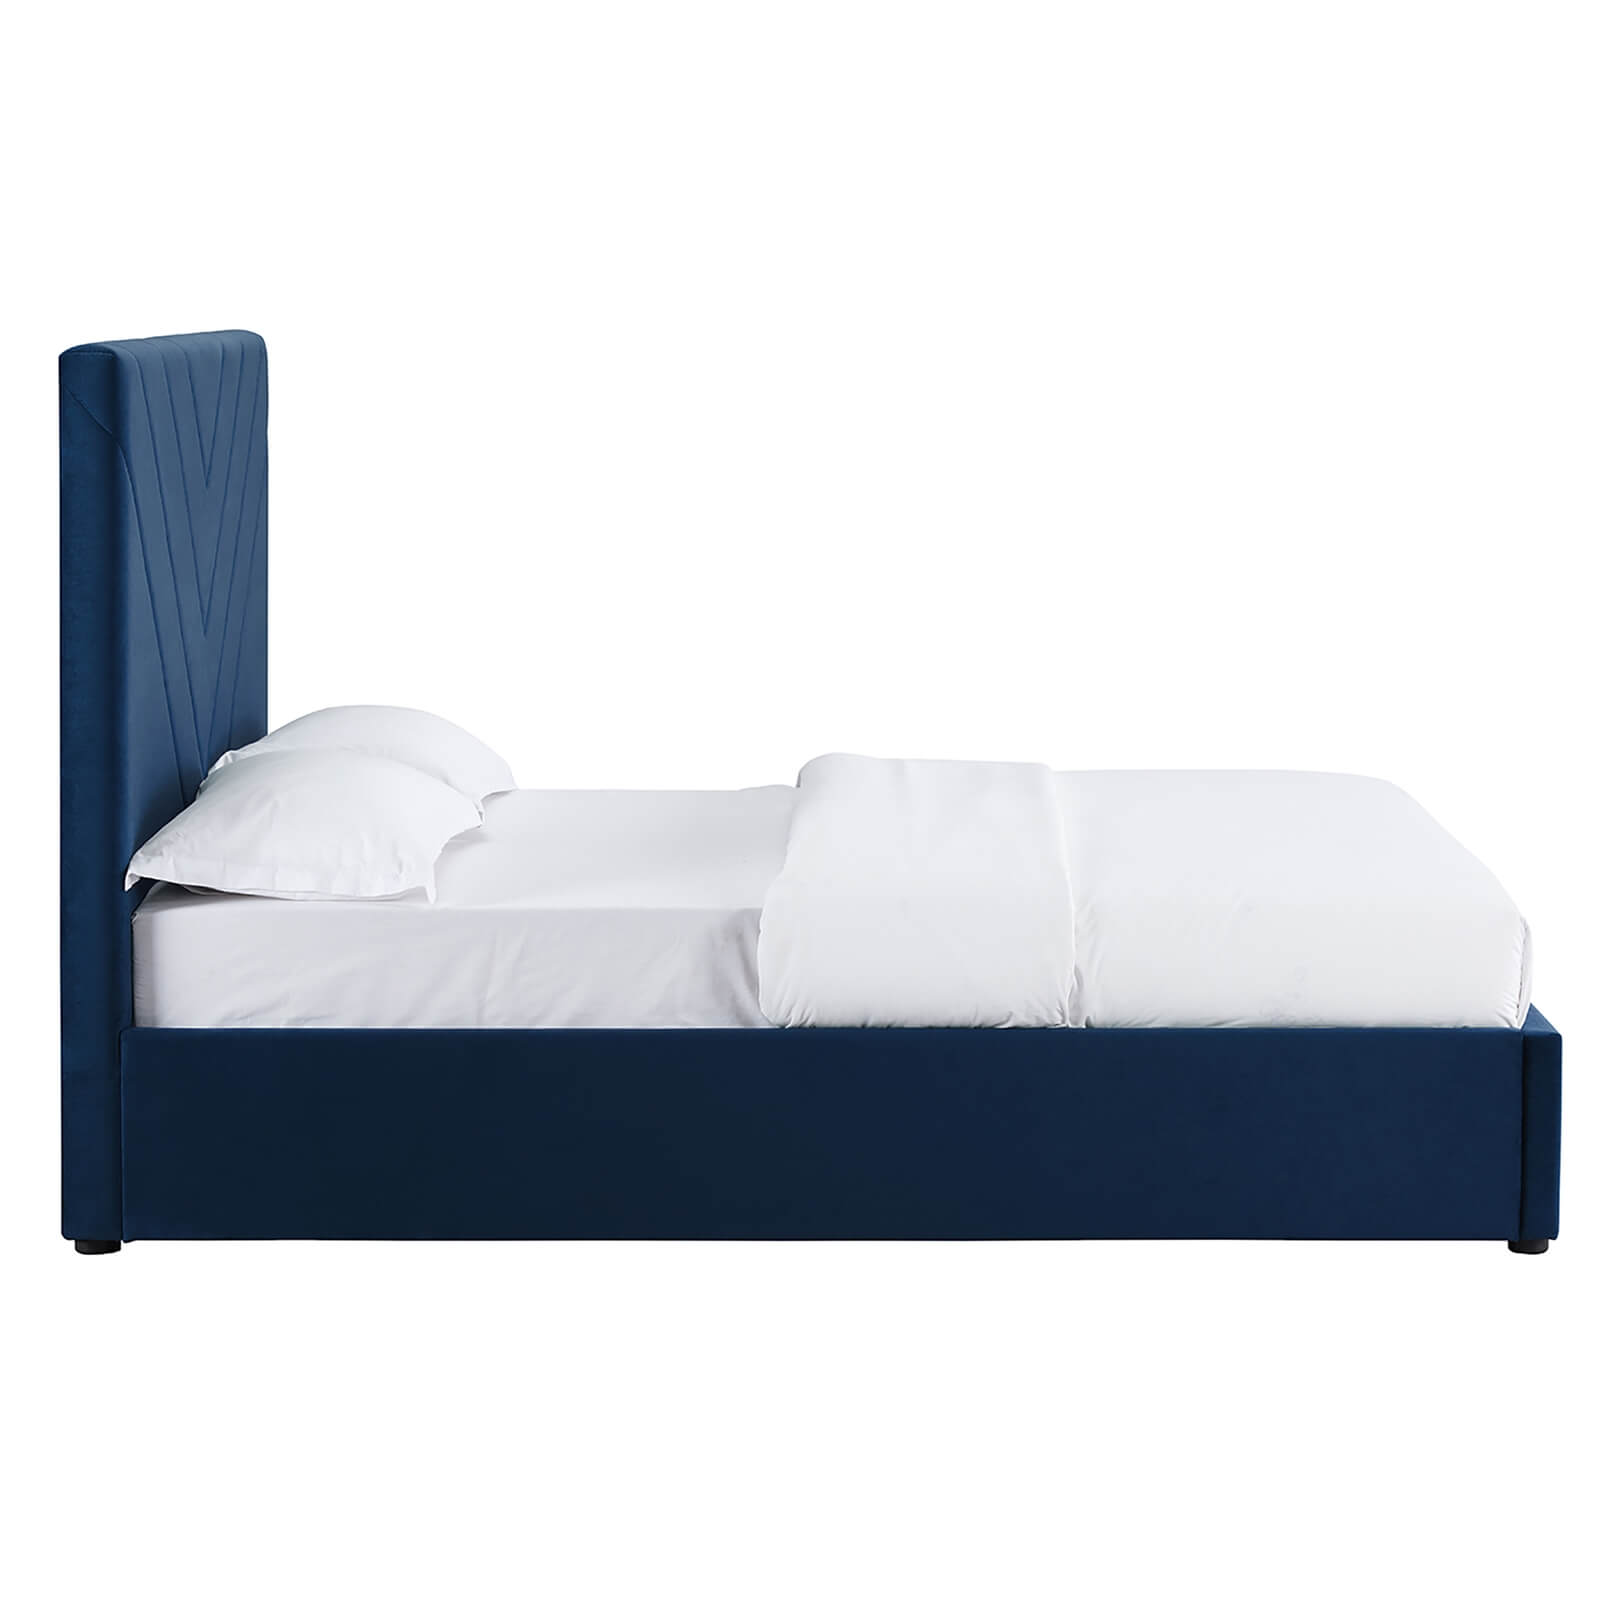 Islington Double Bed - Royal Blue